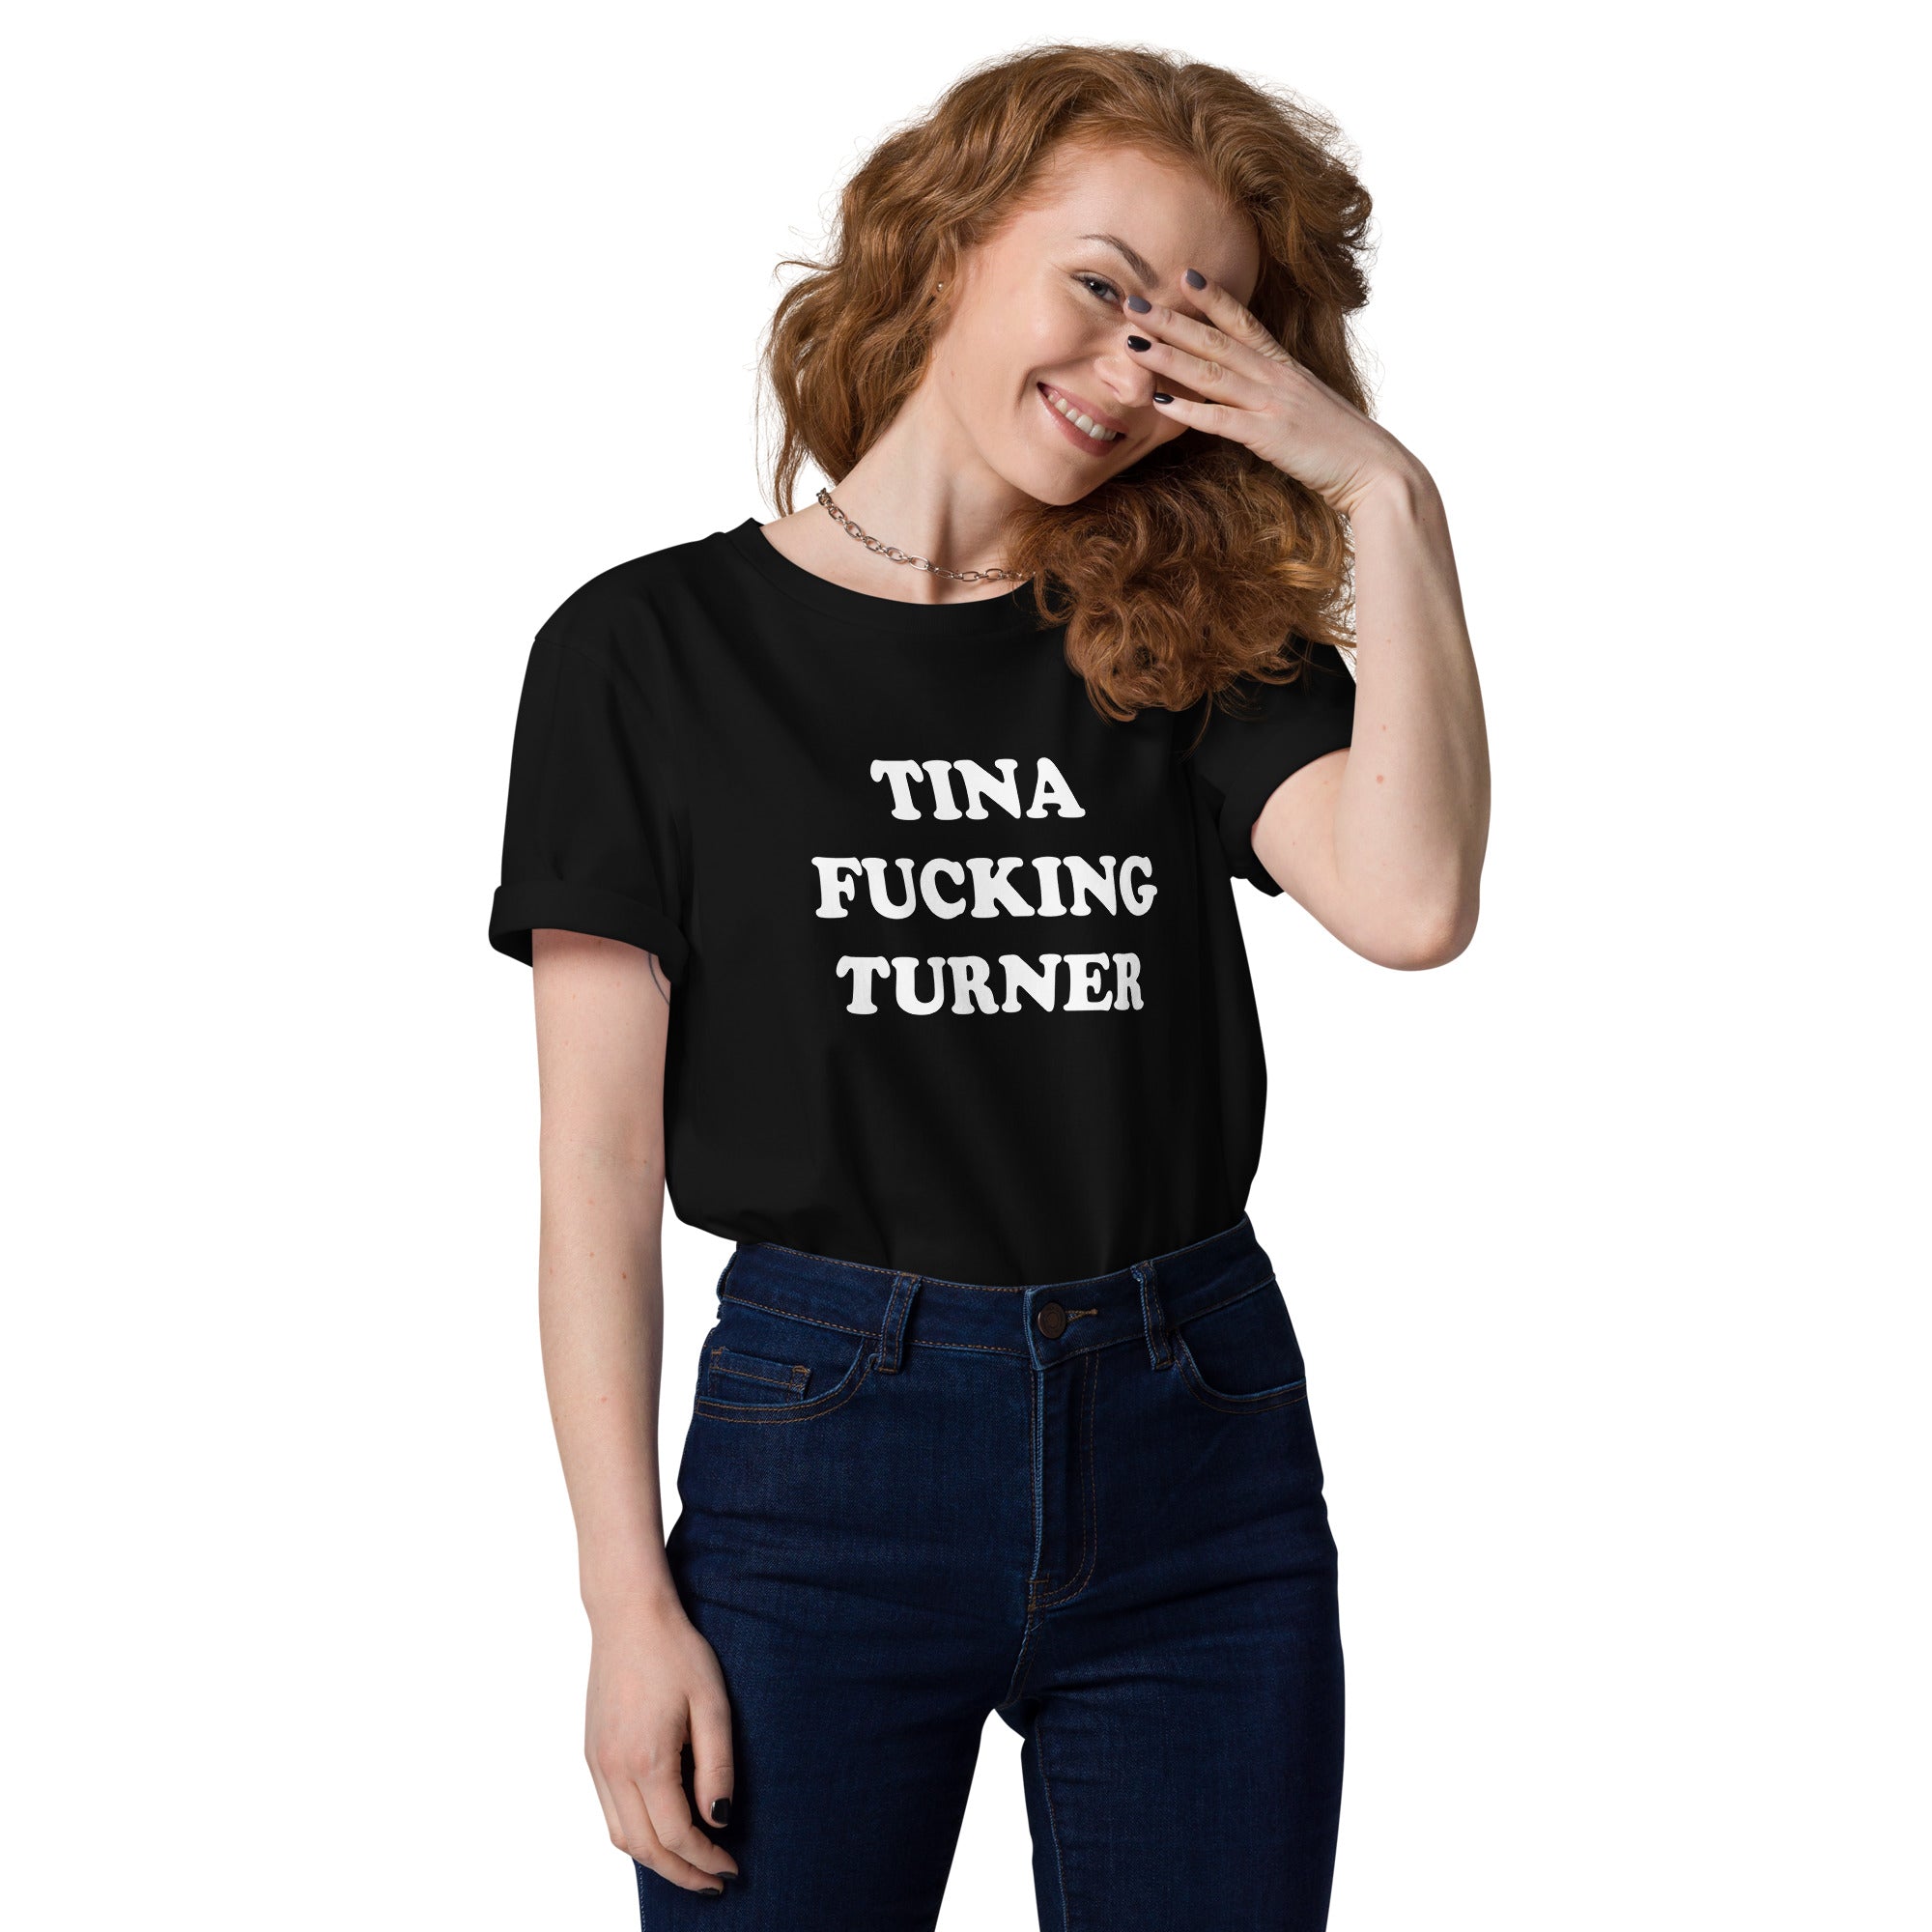 TINA F*CKING TURNER Printed Unisex organic cotton t-shirt (white text)